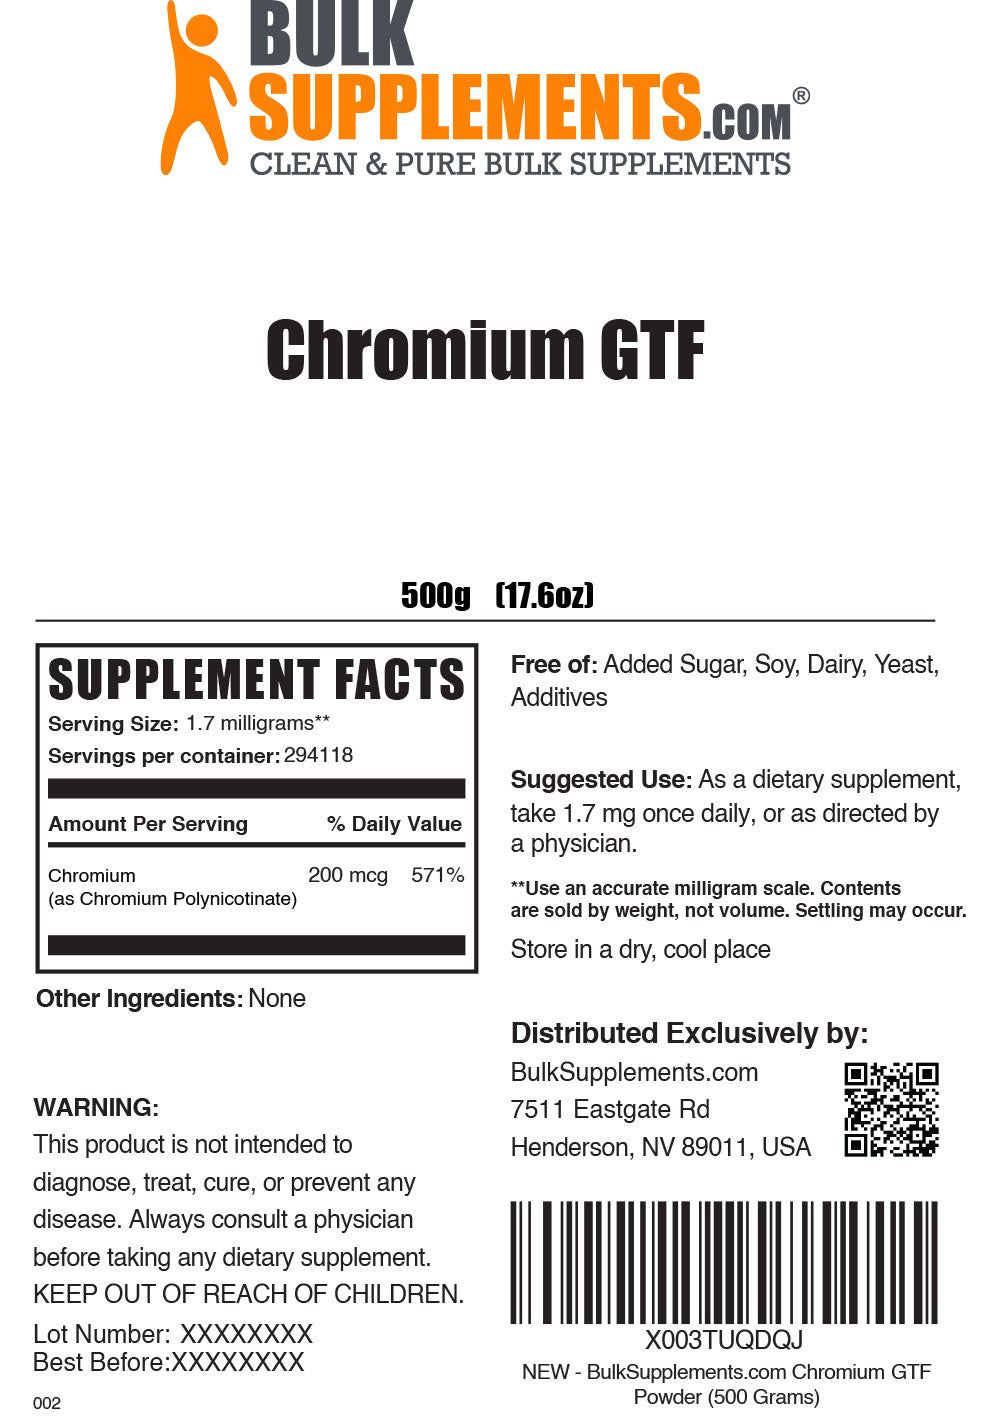 500g chromium GTF supplement facts label